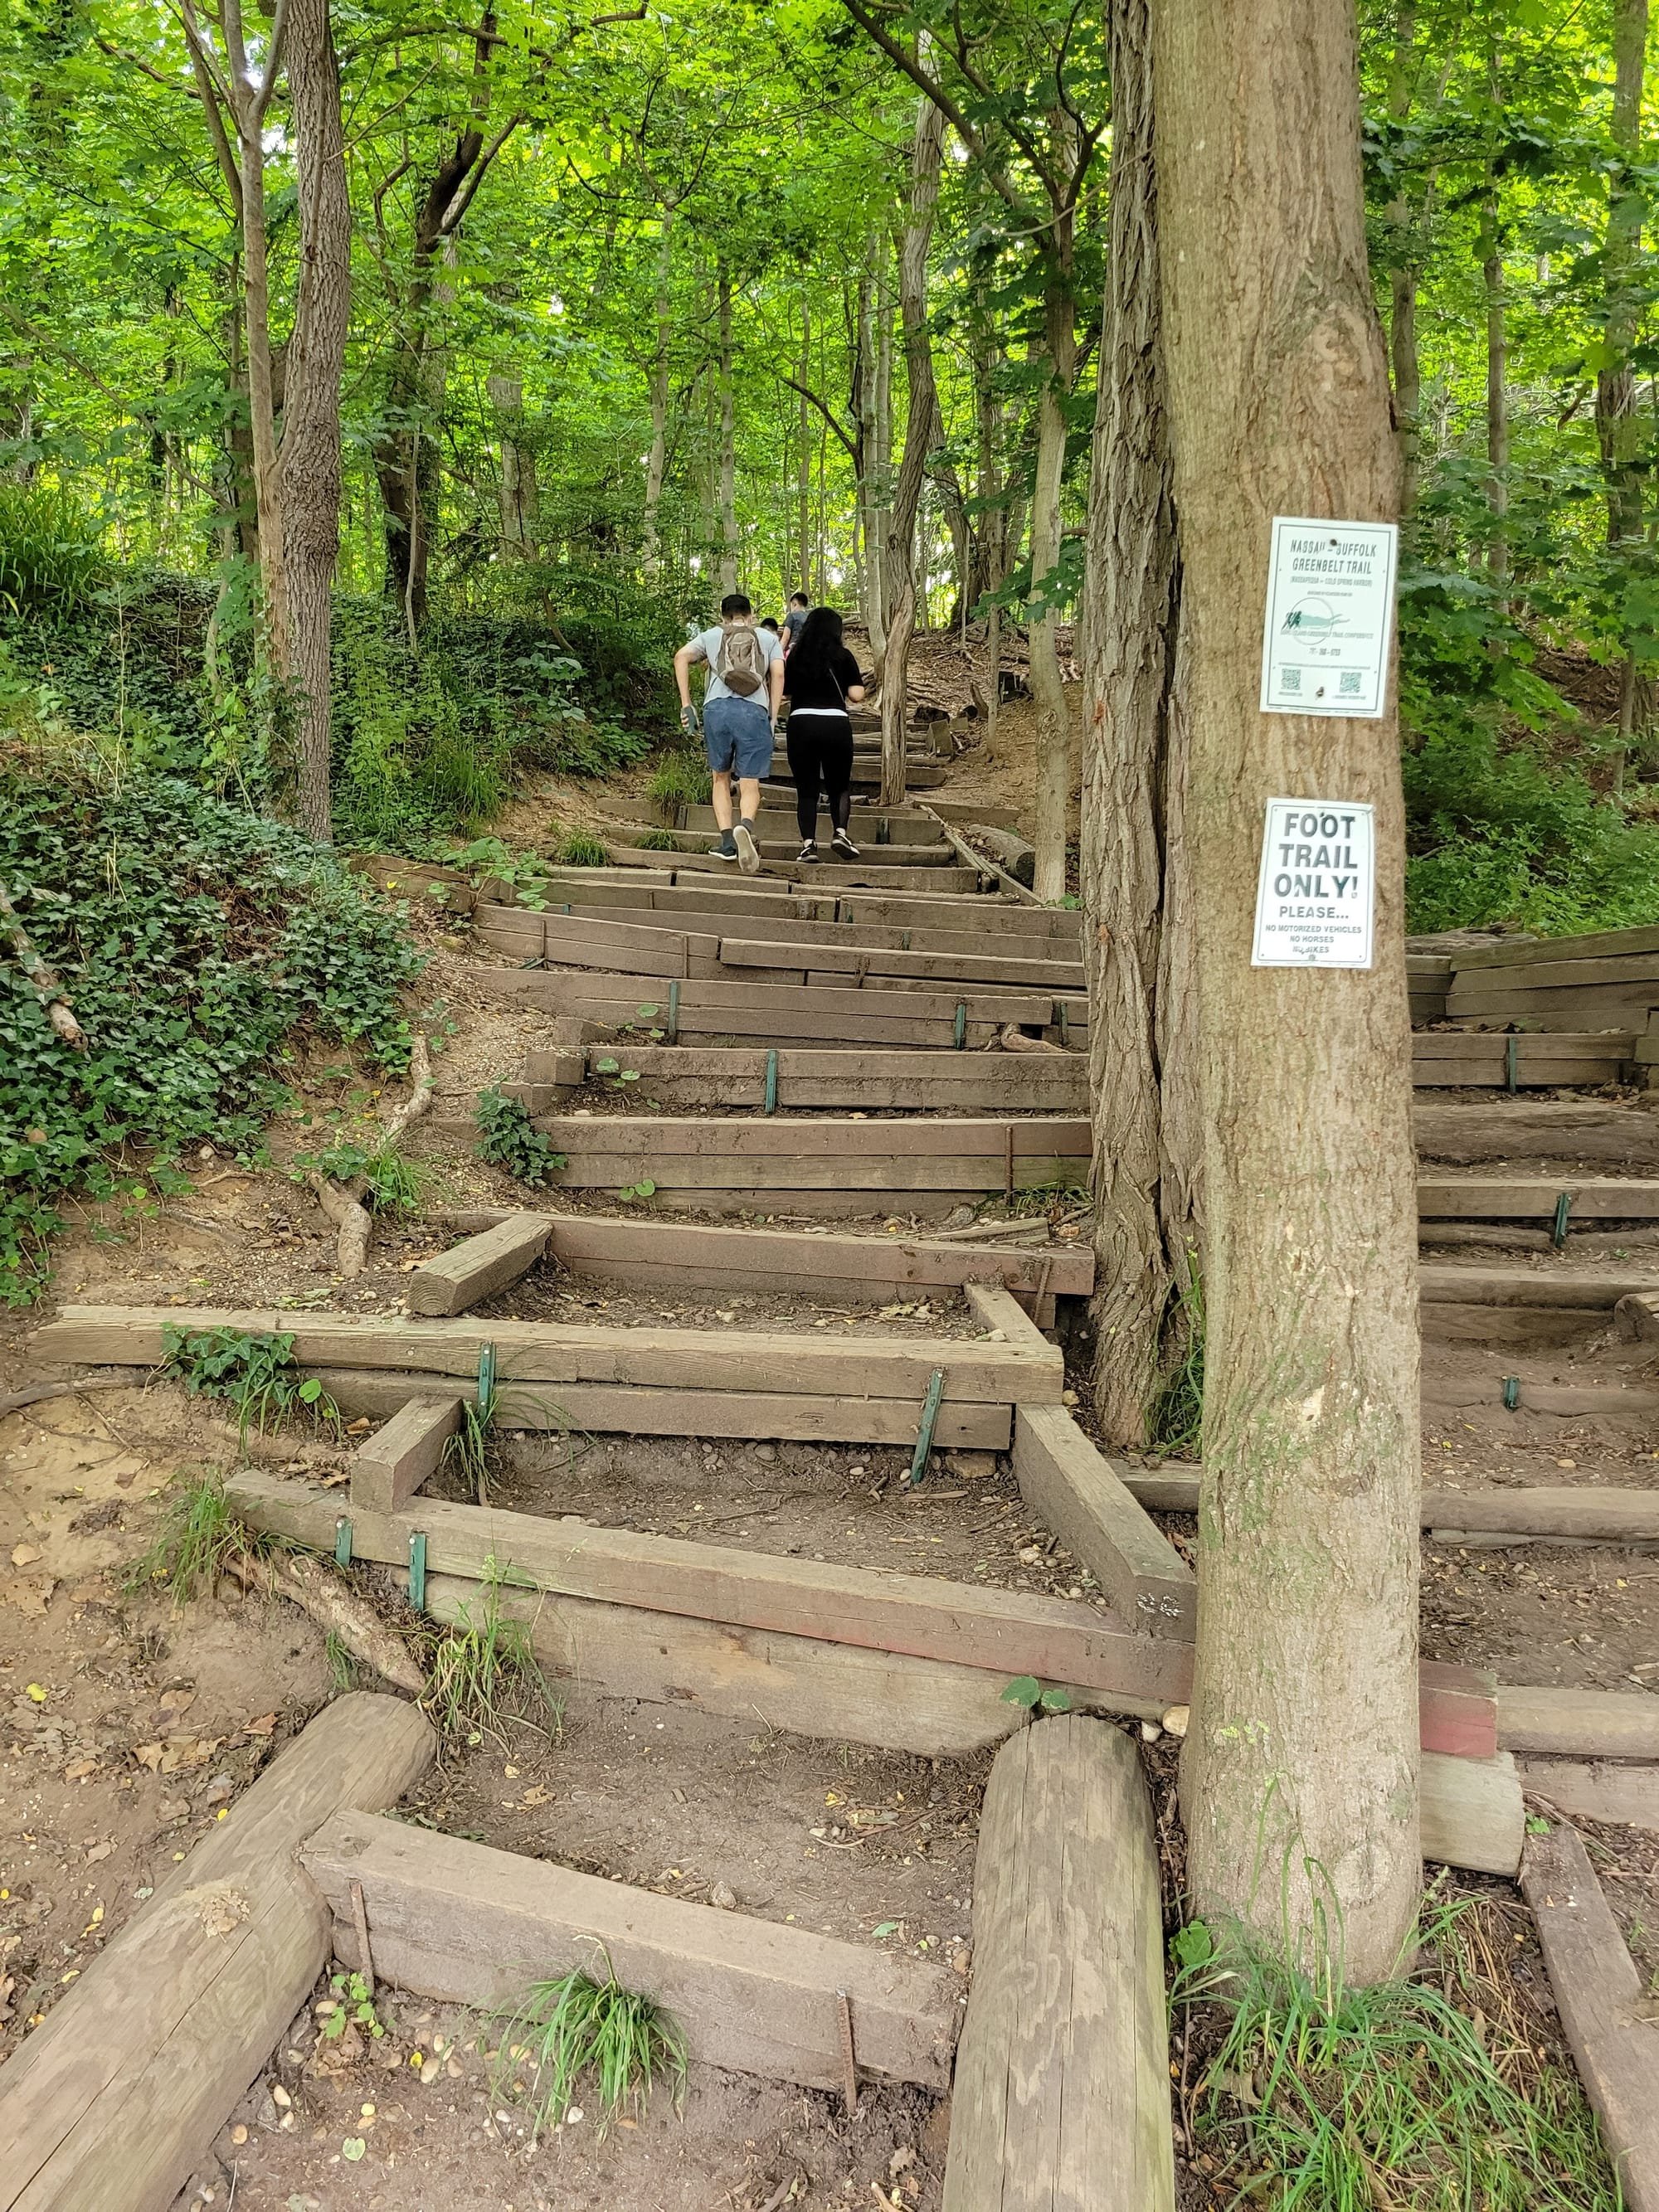 Cold Spring Harbor State Park Hiking Trail - June 26, 2021